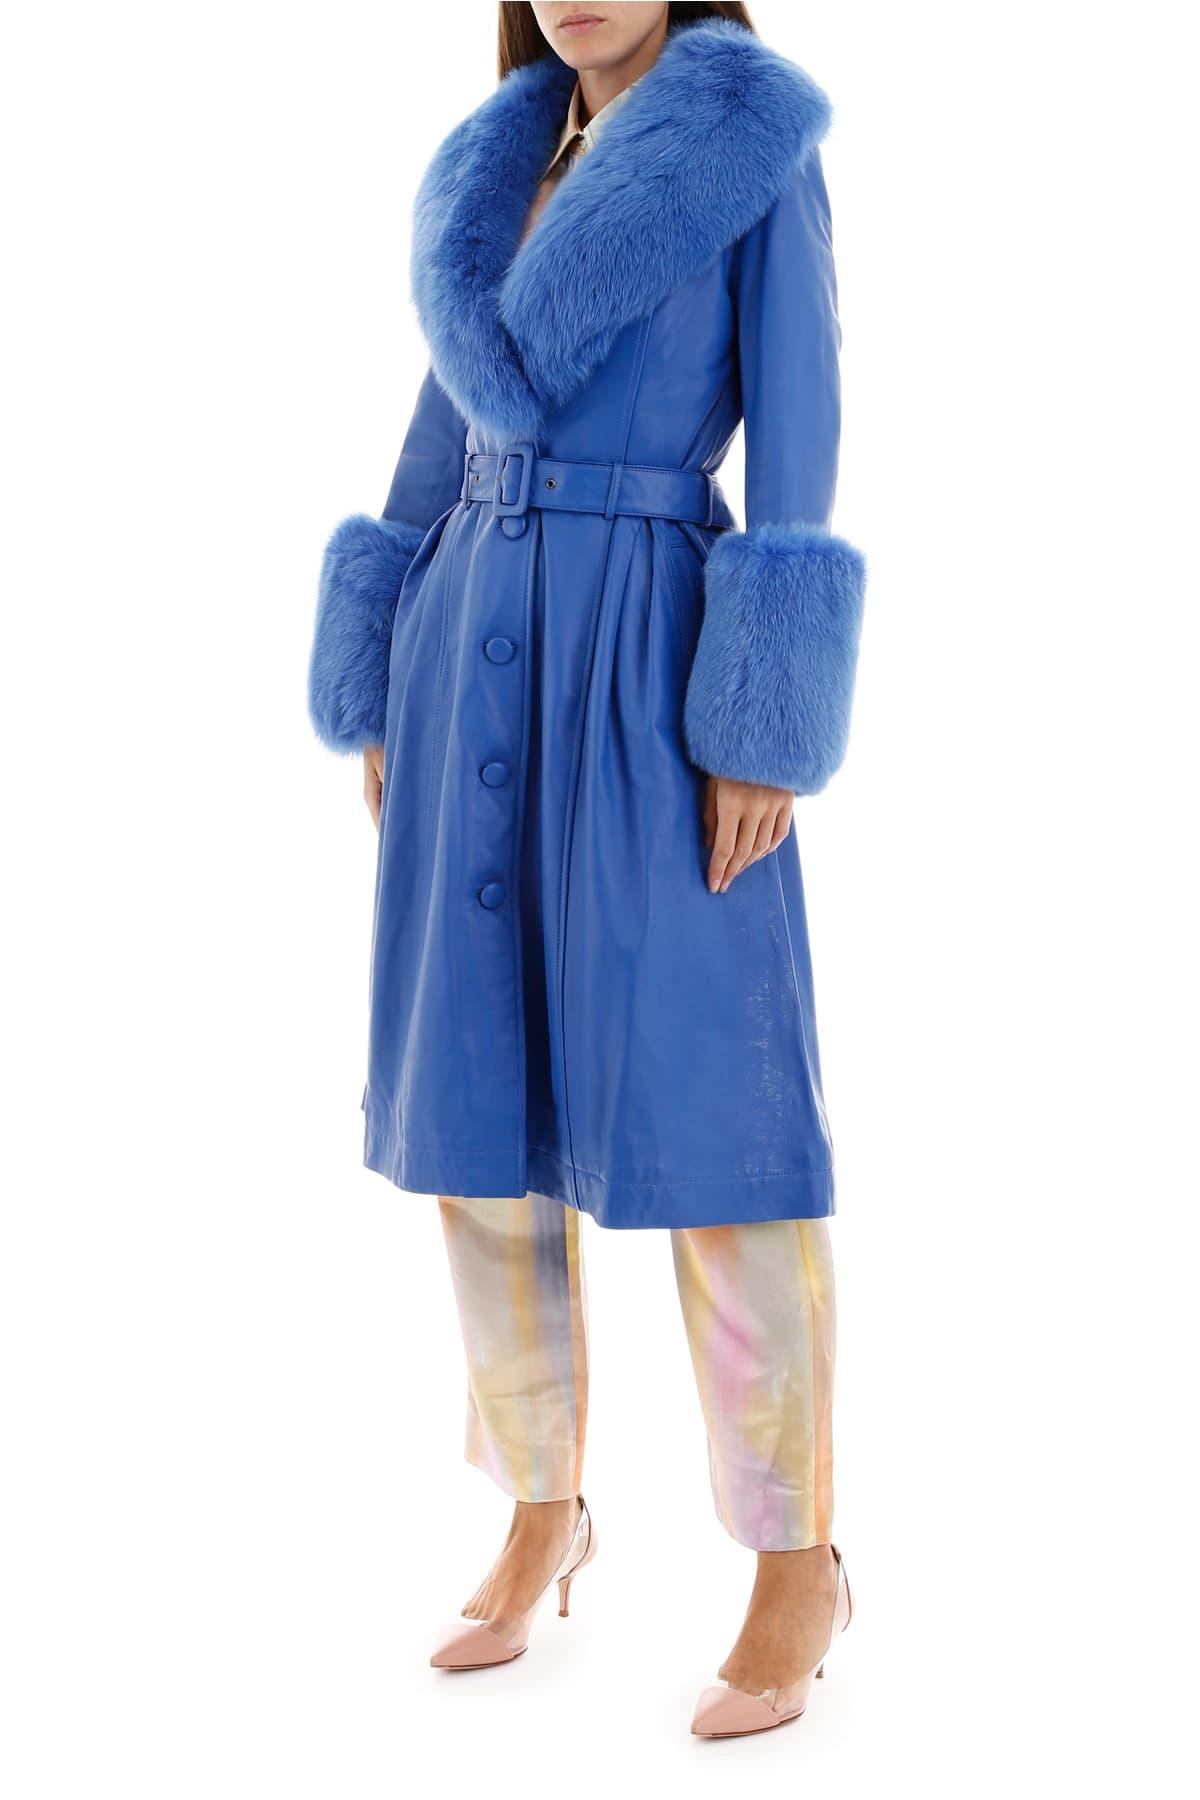 Saks Potts Foxy Fur-trimmed Leather Coat in Blue - Lyst